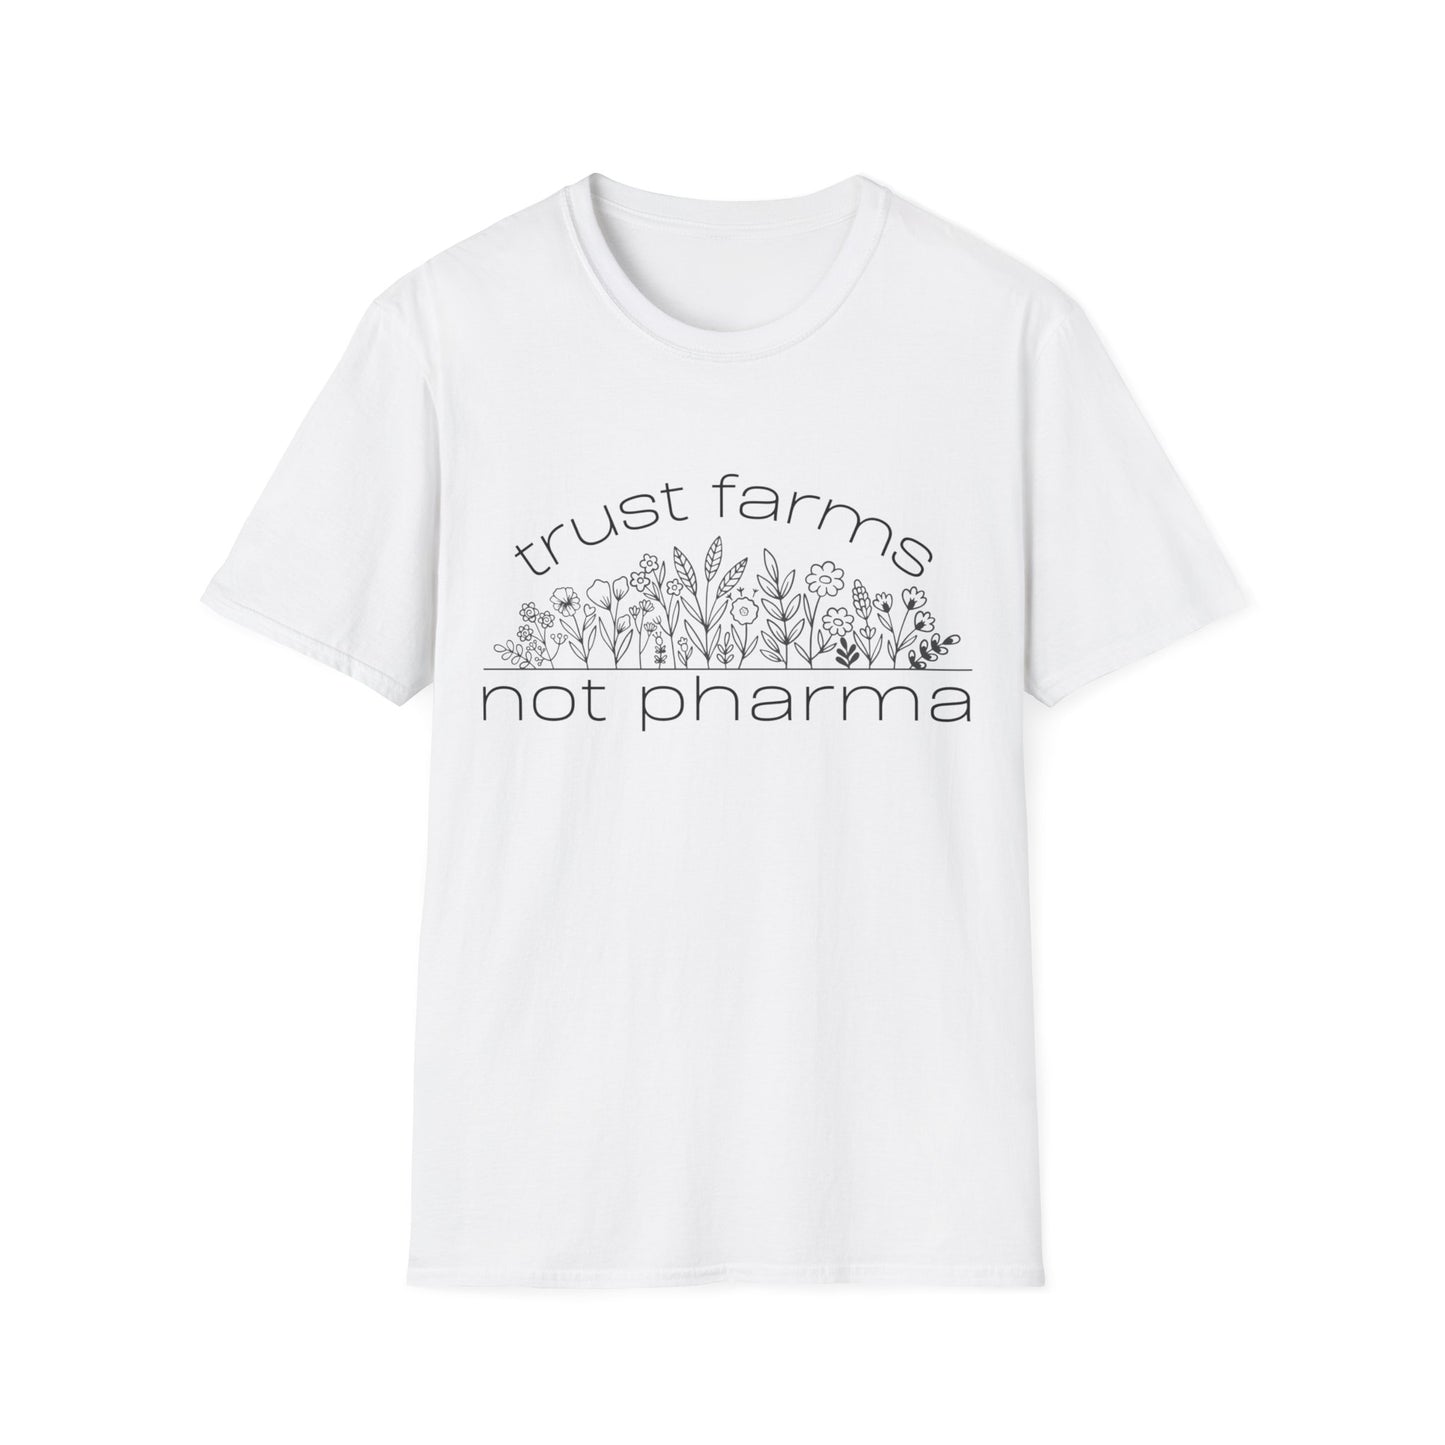 Trust Farms Not Pharma - Unisex Softstyle T-Shirt